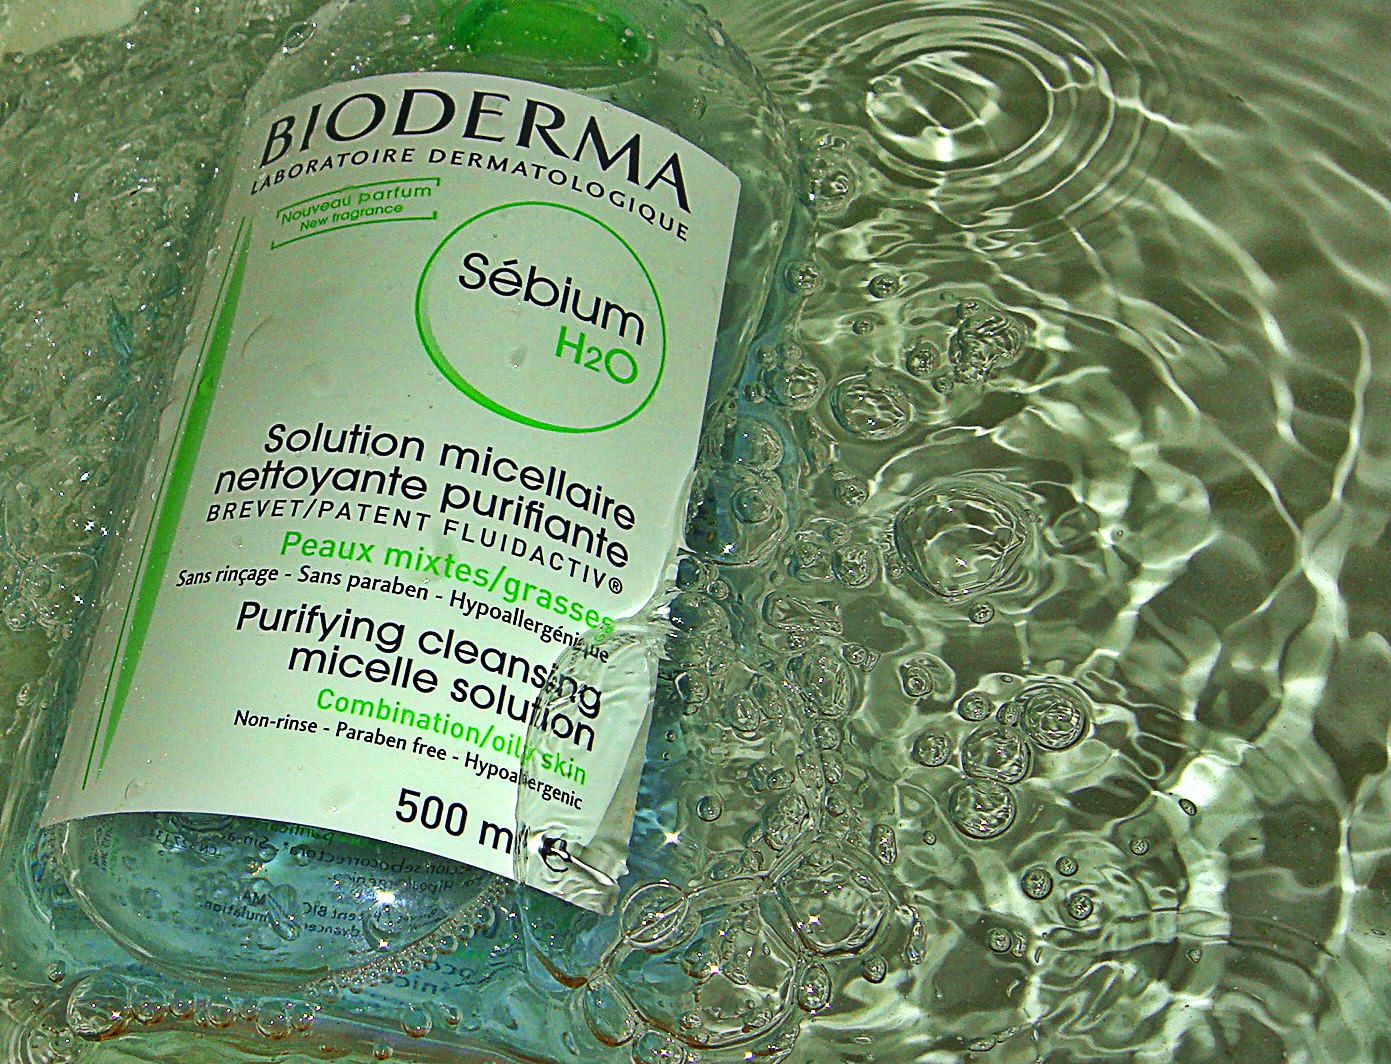 Bioderma Sebium h2o. Bioderma мицеллярная вода Sebium h2o. Мицеллярная вода Bioderma для комбинированной кожи. Биодерма мицеллярная вода состав. Чем смывать мицеллярную воду